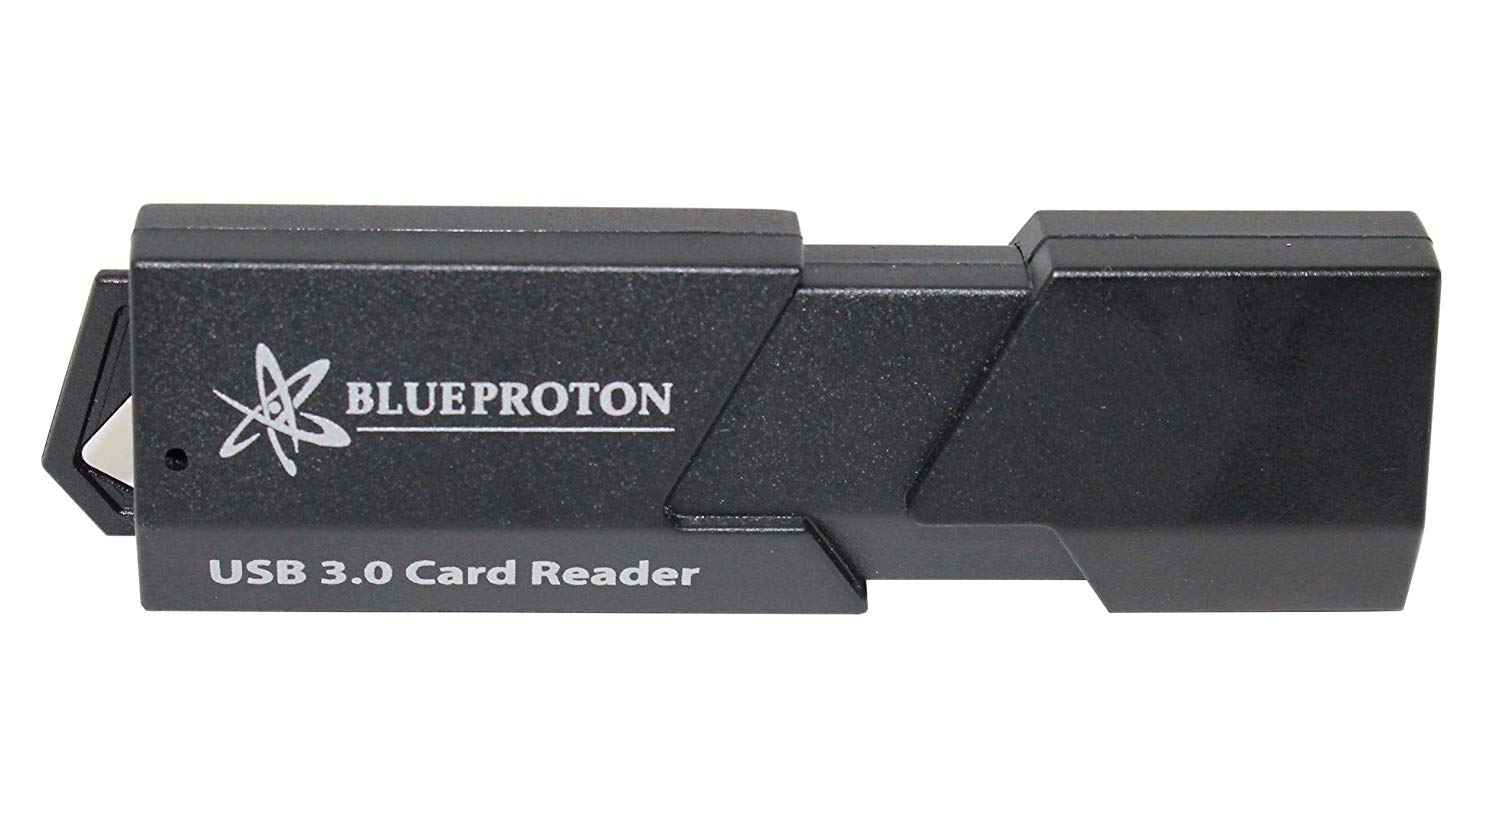 SanDisk 256GB MicroSDXC UHS-I Card for Nintendo Switch & BlueProton USB 3.0 MicroSDXC Card Reader